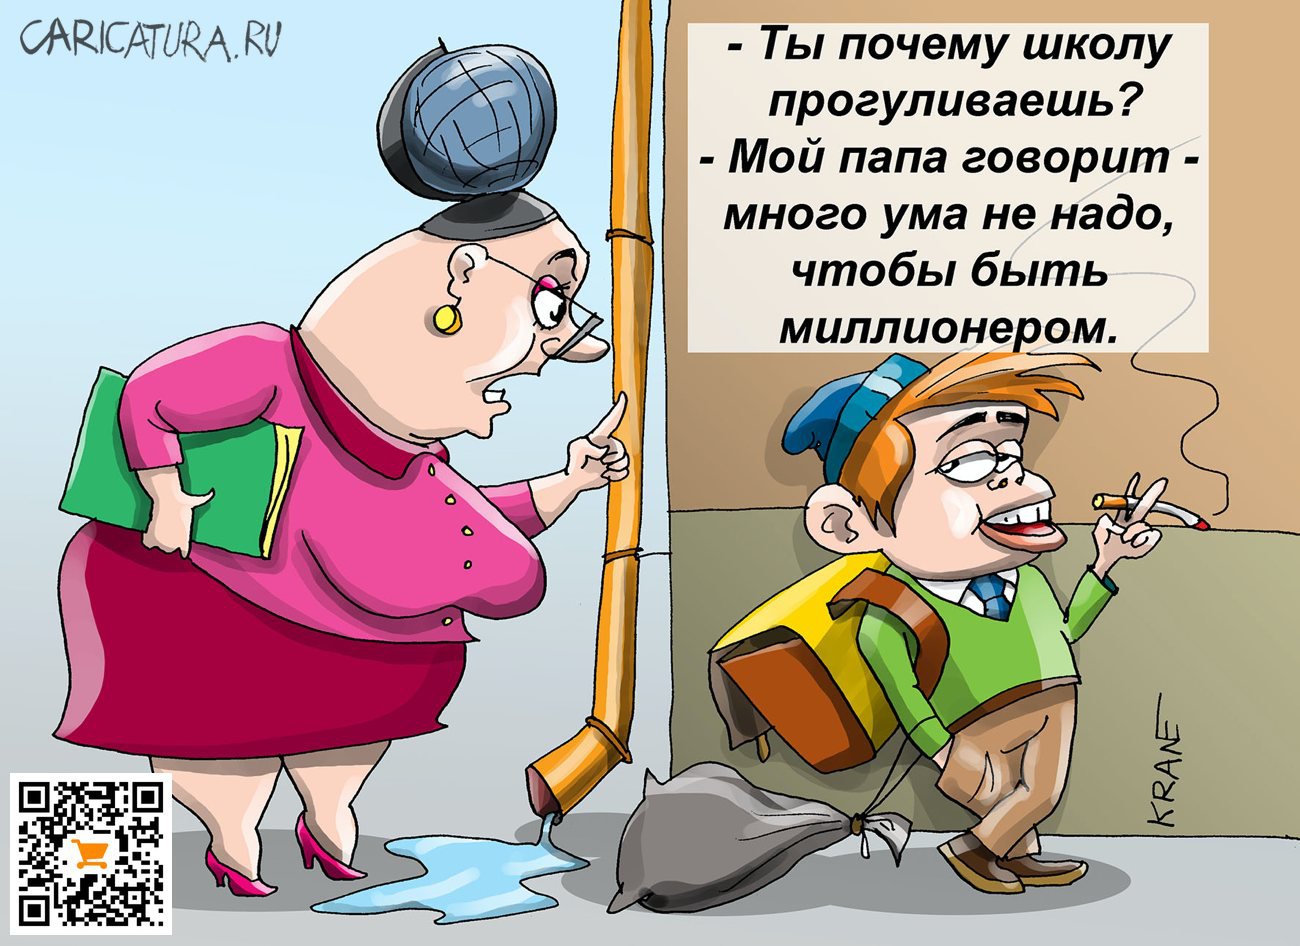 Карикатура "Все хотят стать миллионерами", Евгений Кран